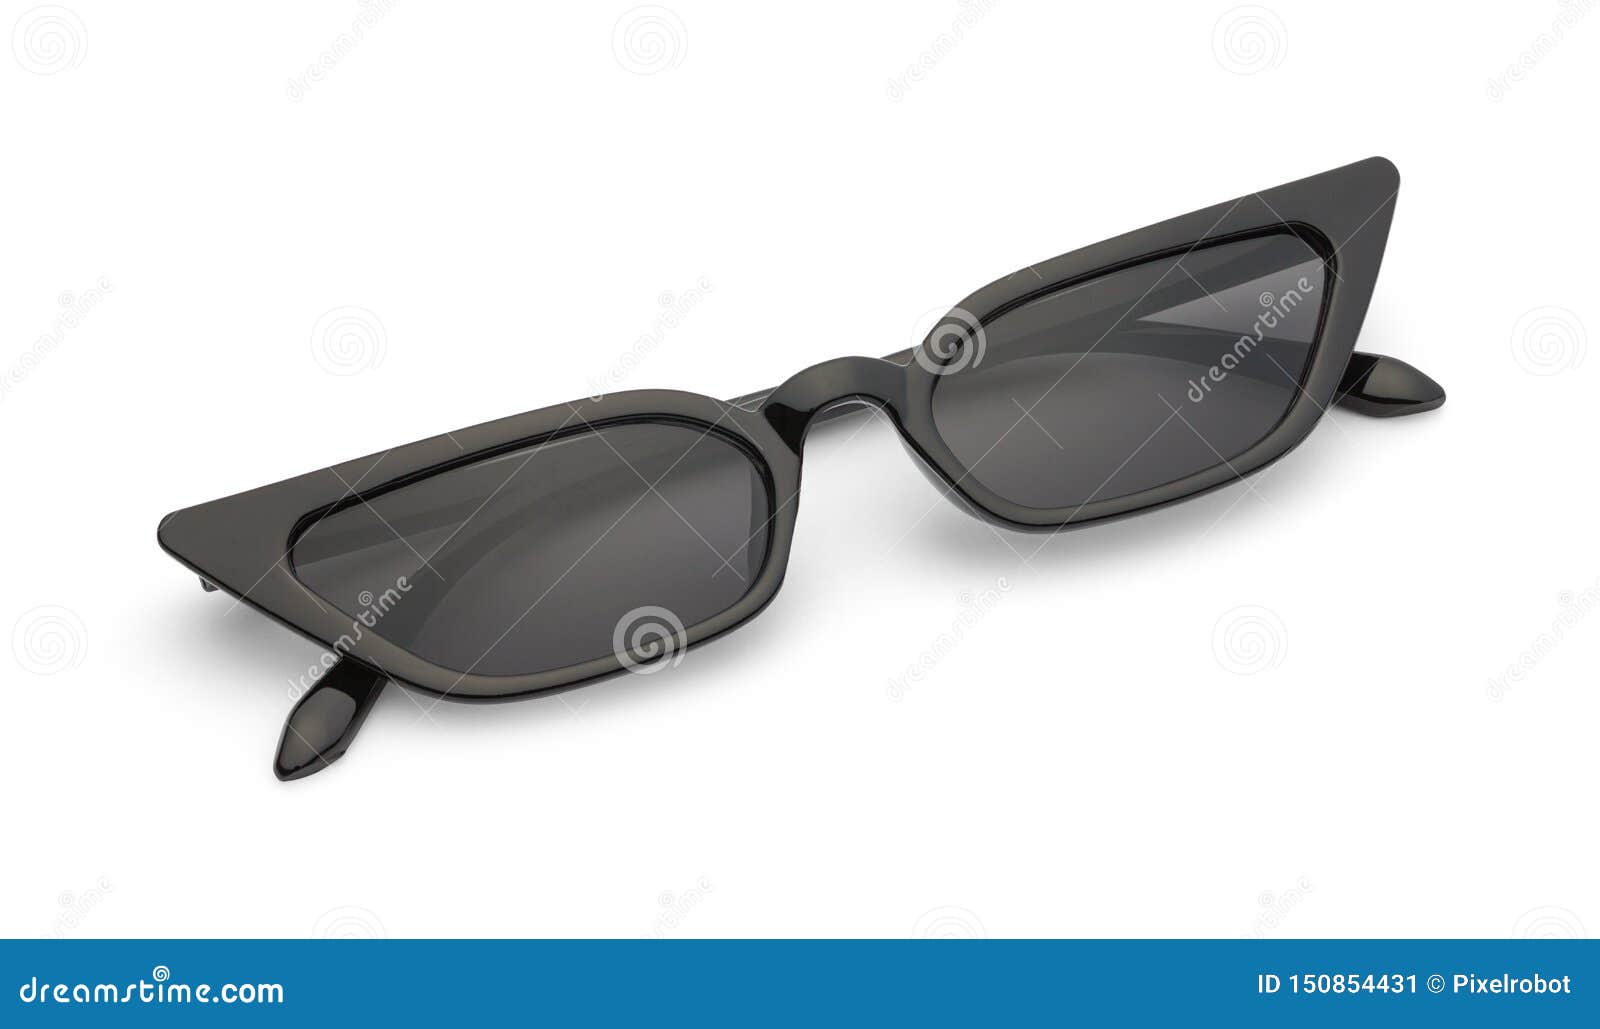 Folded Slim Black Sunglasses Stock Image - Image of cool, slim: 150854431